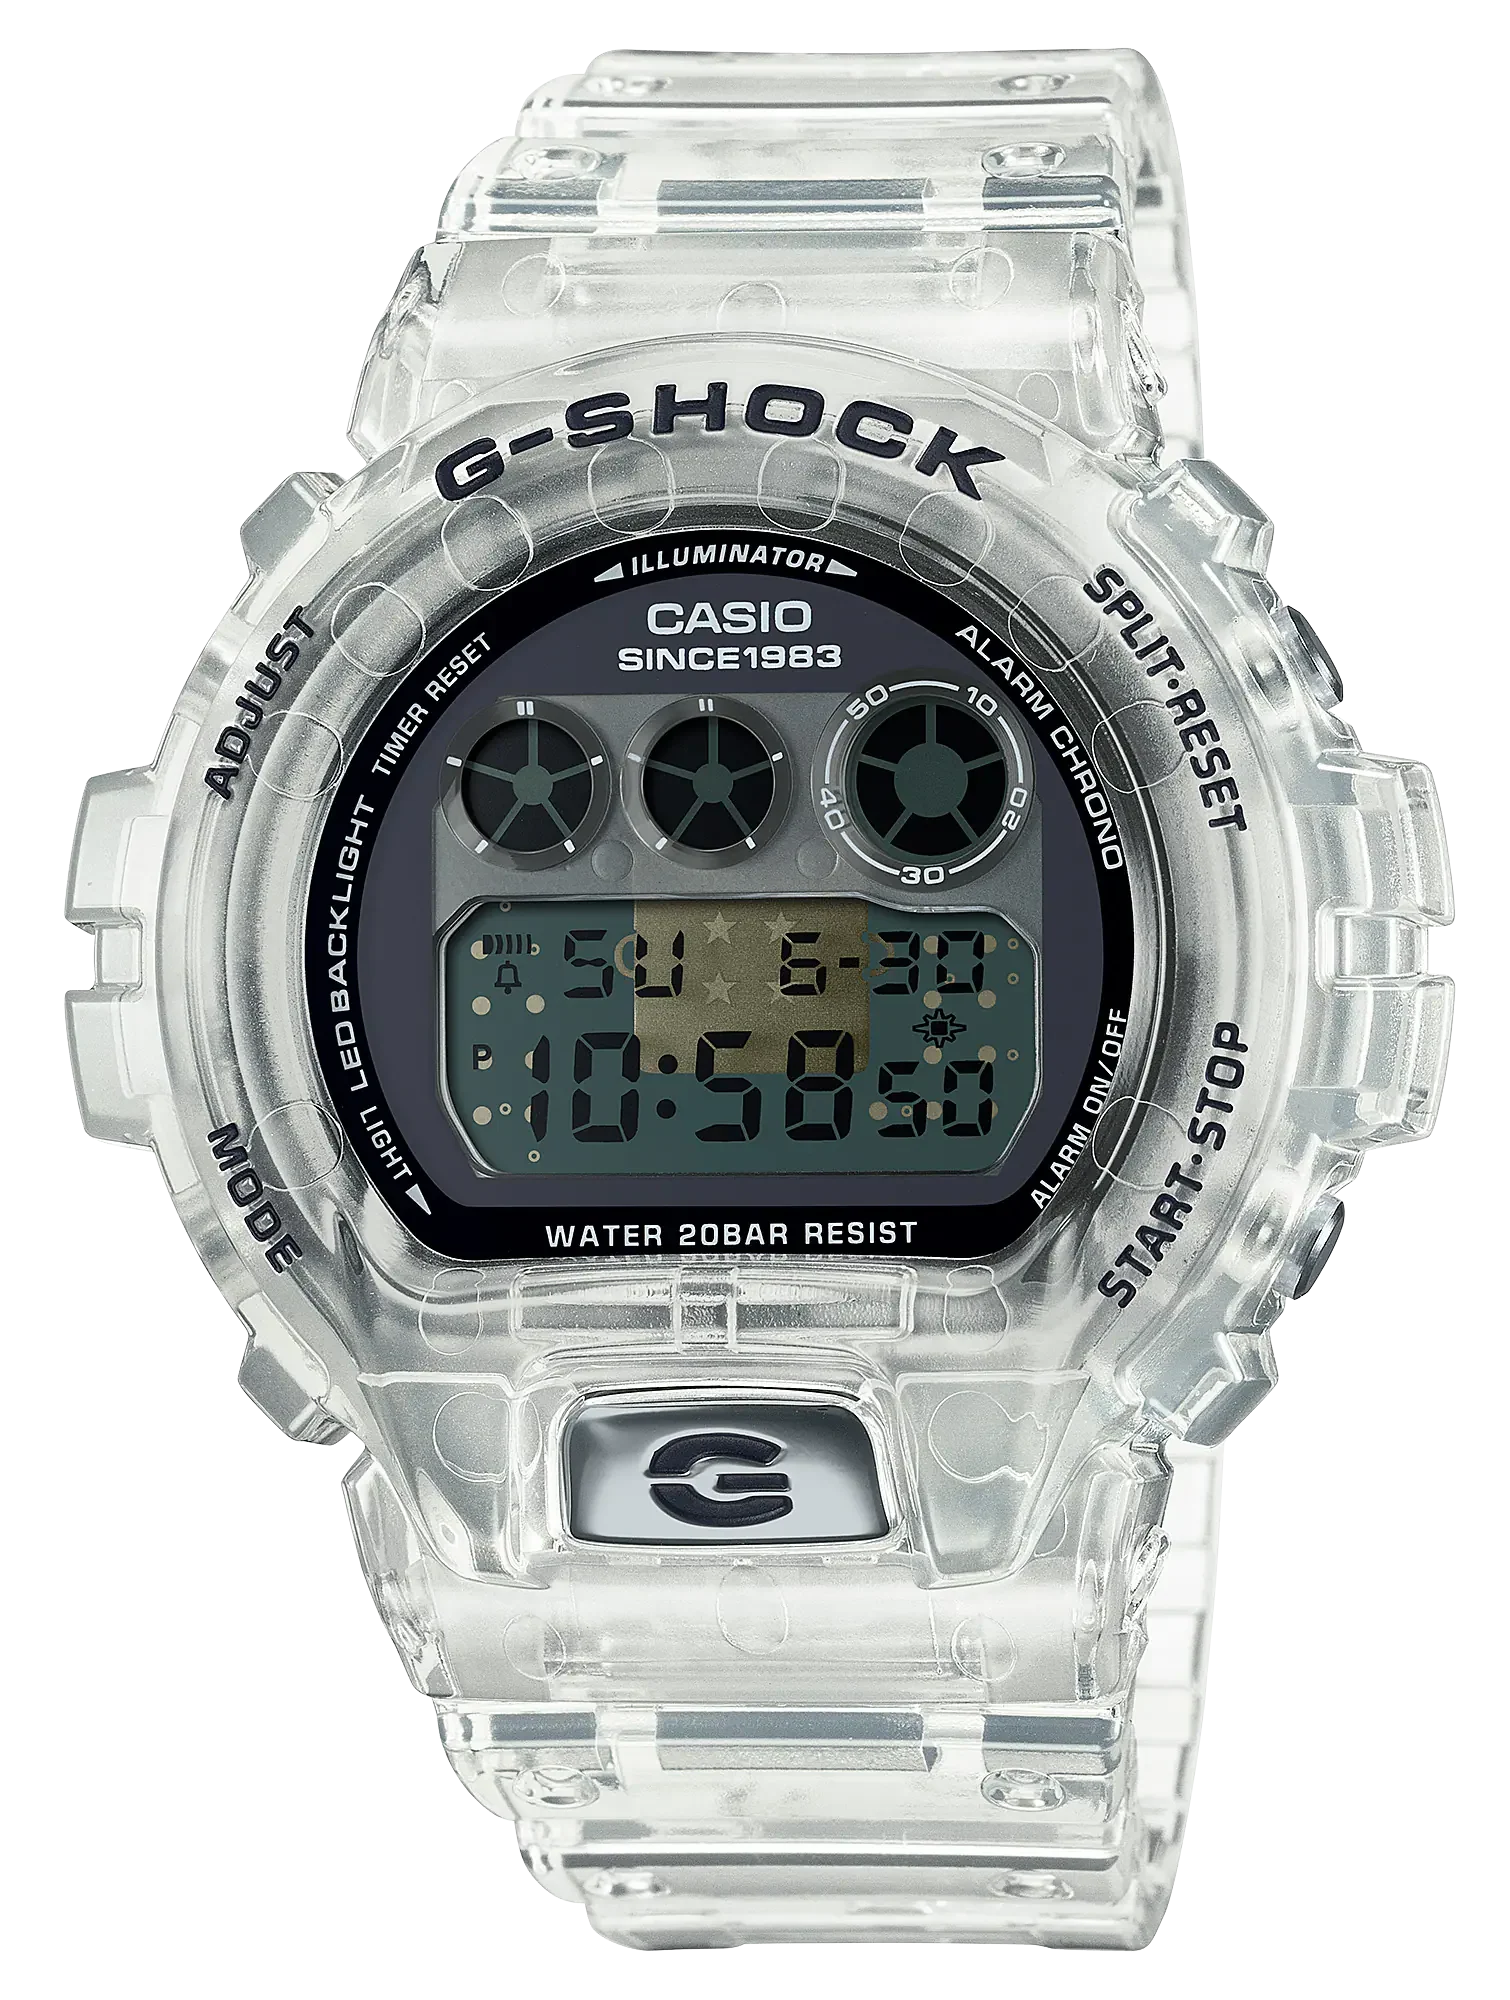 Reloj de hombre CASIO G-SHOCK GA-114RX-7AER